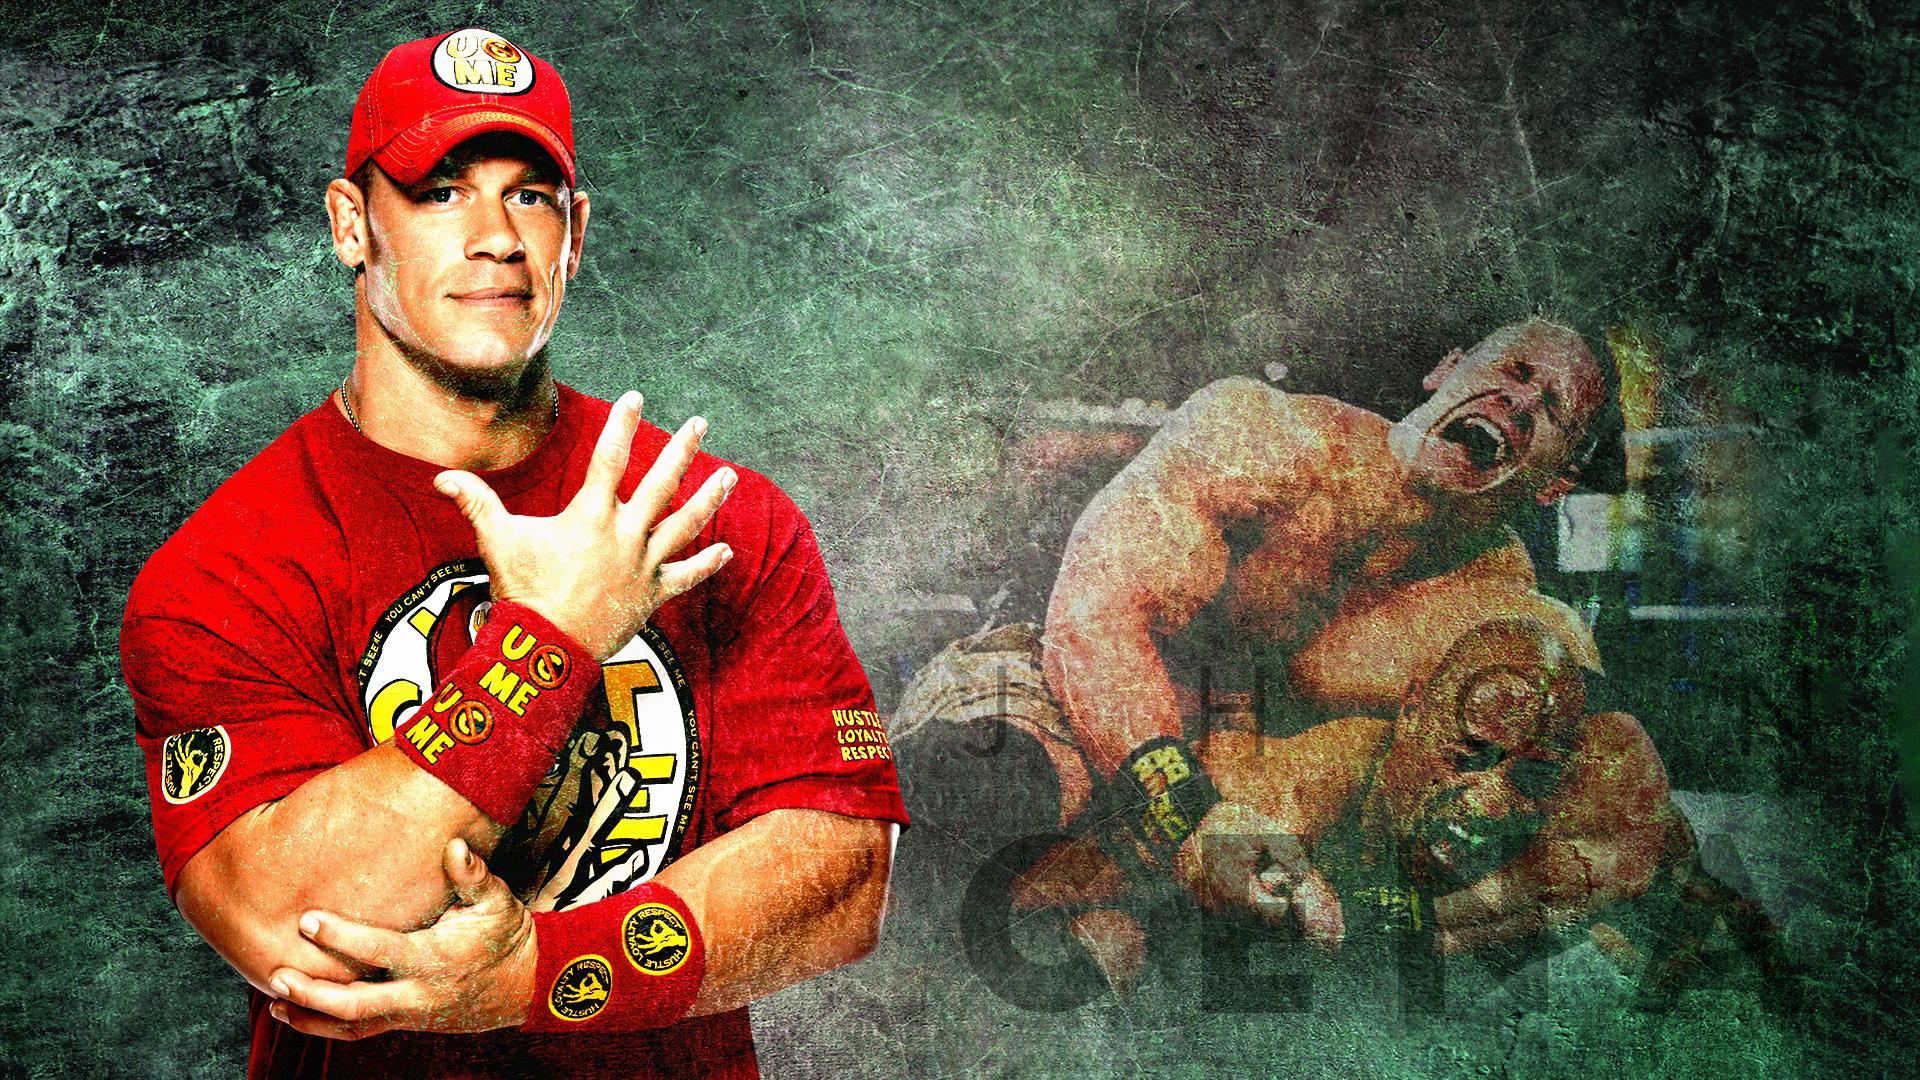 John Cena Wallpaper: 10 must downloads